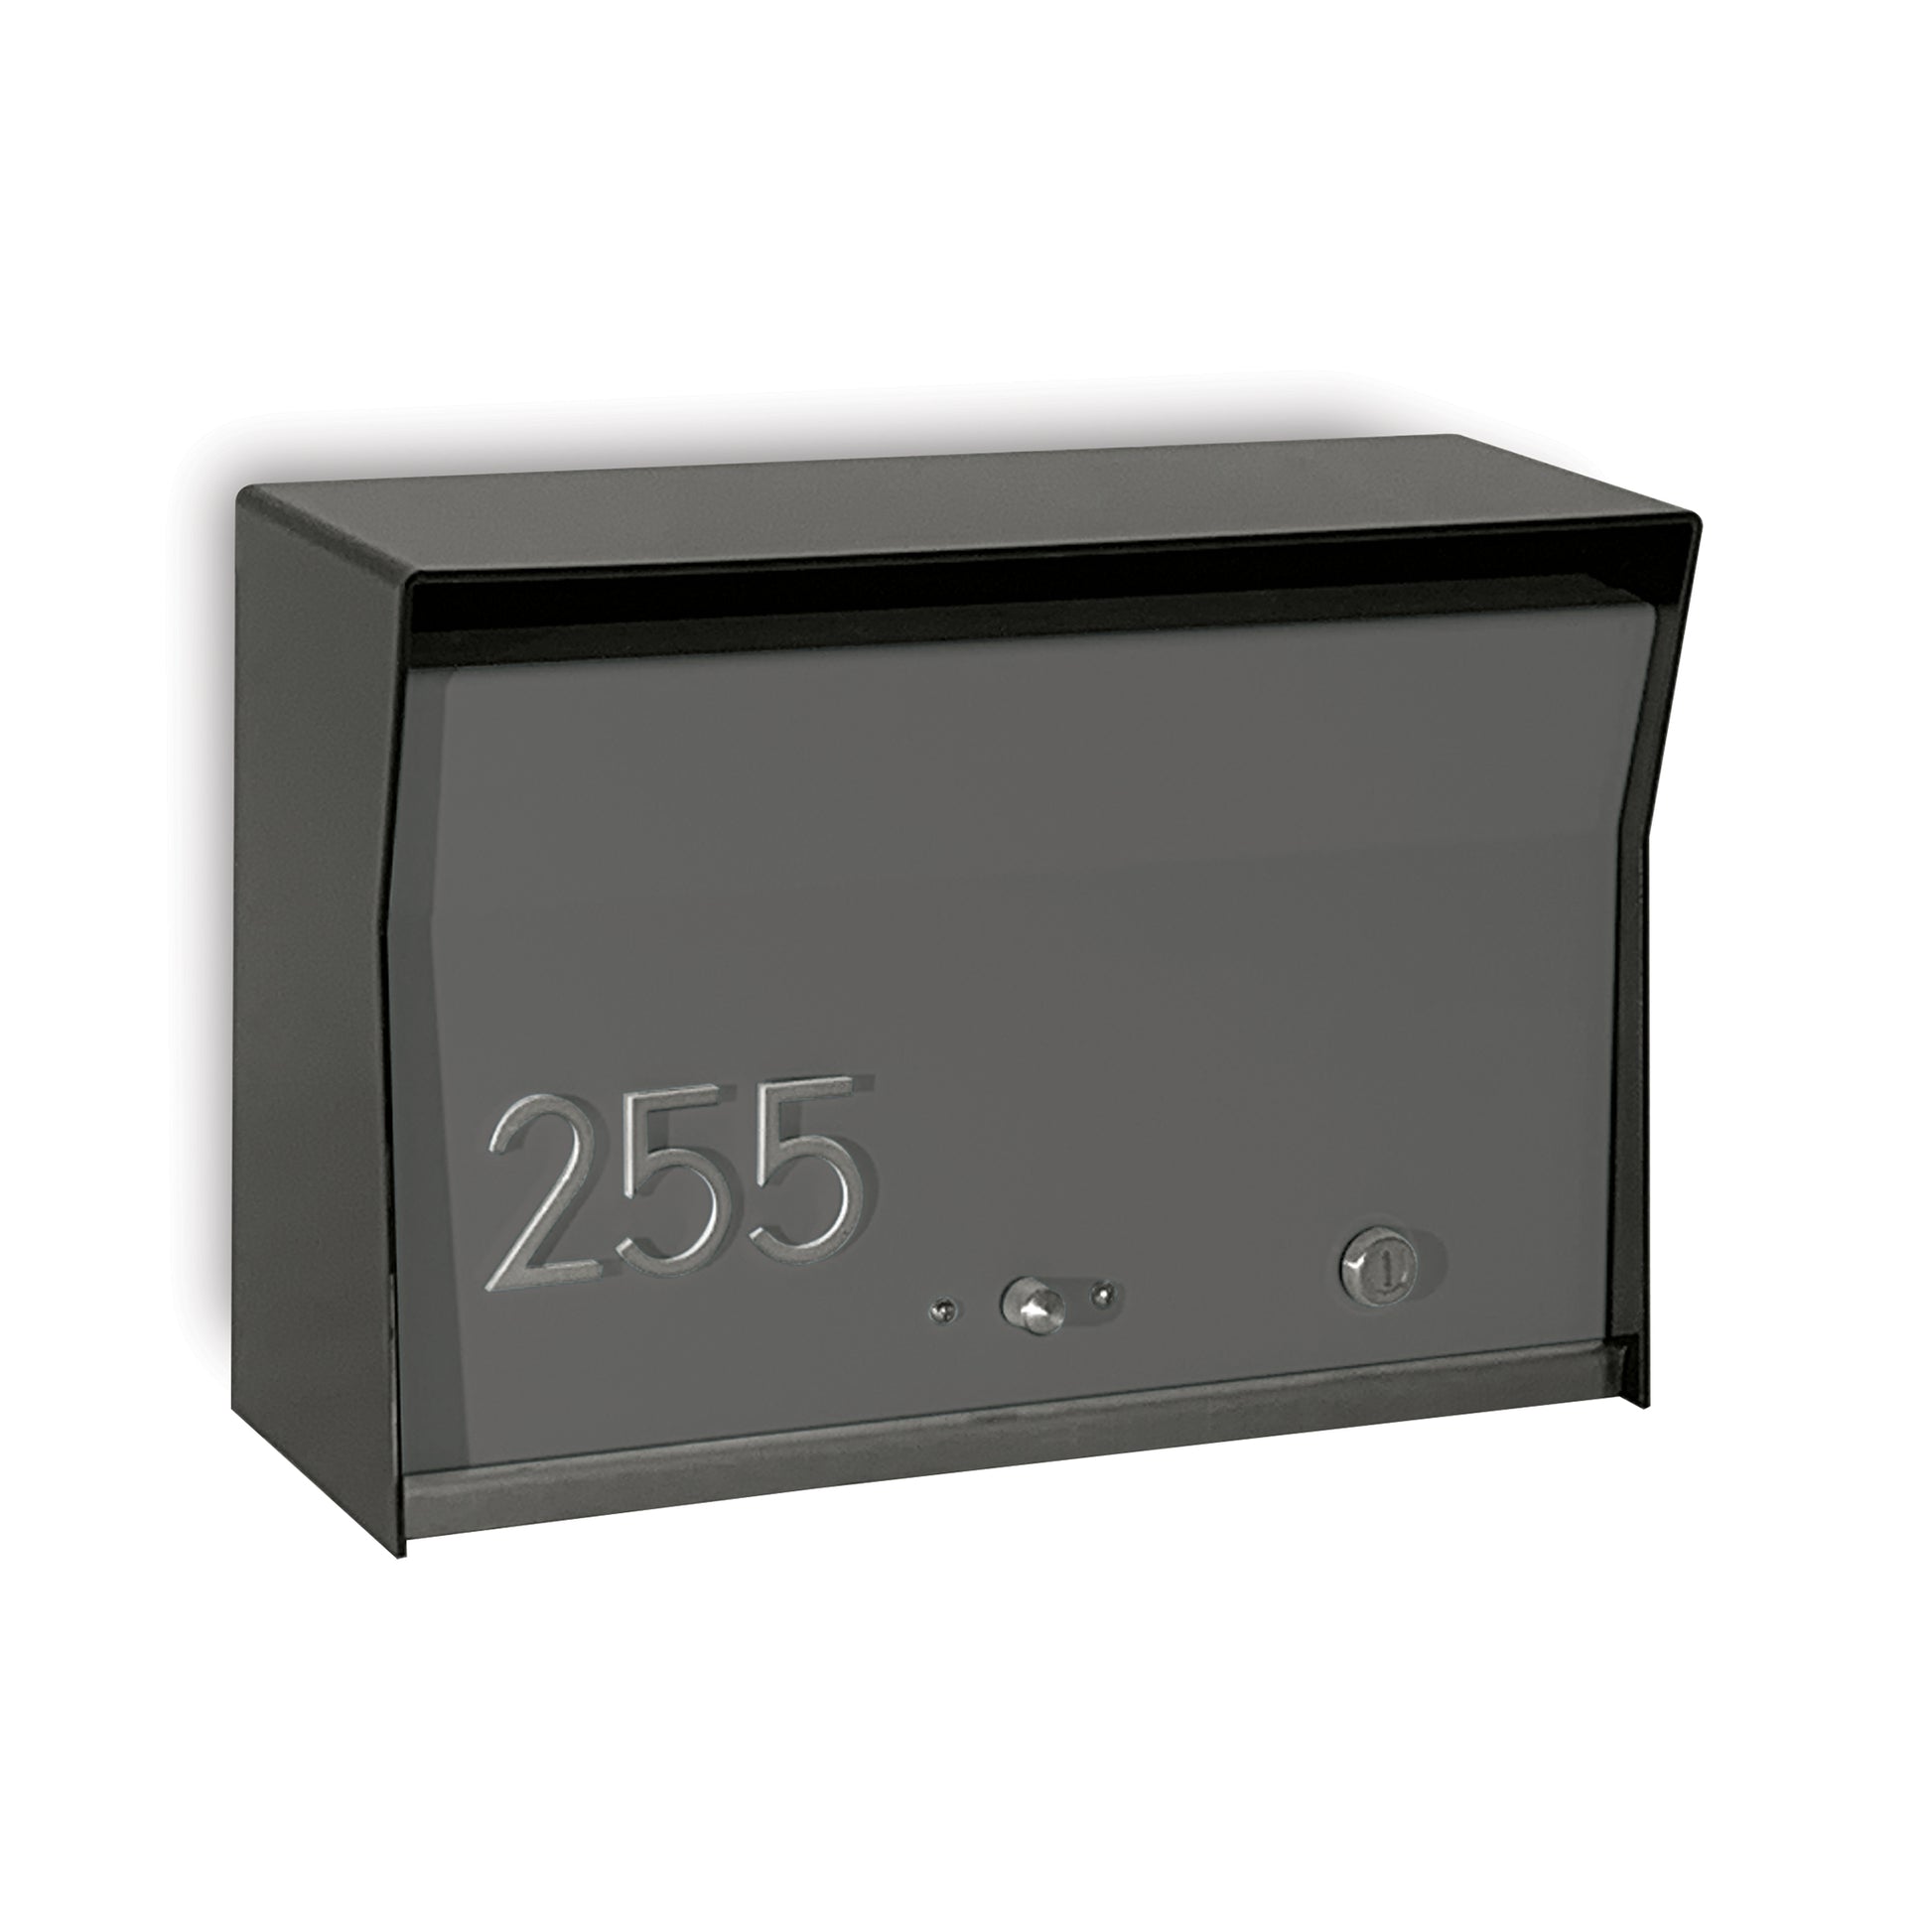 RetroBox Locking Wall Mount Mailbox in jet black and designer grey